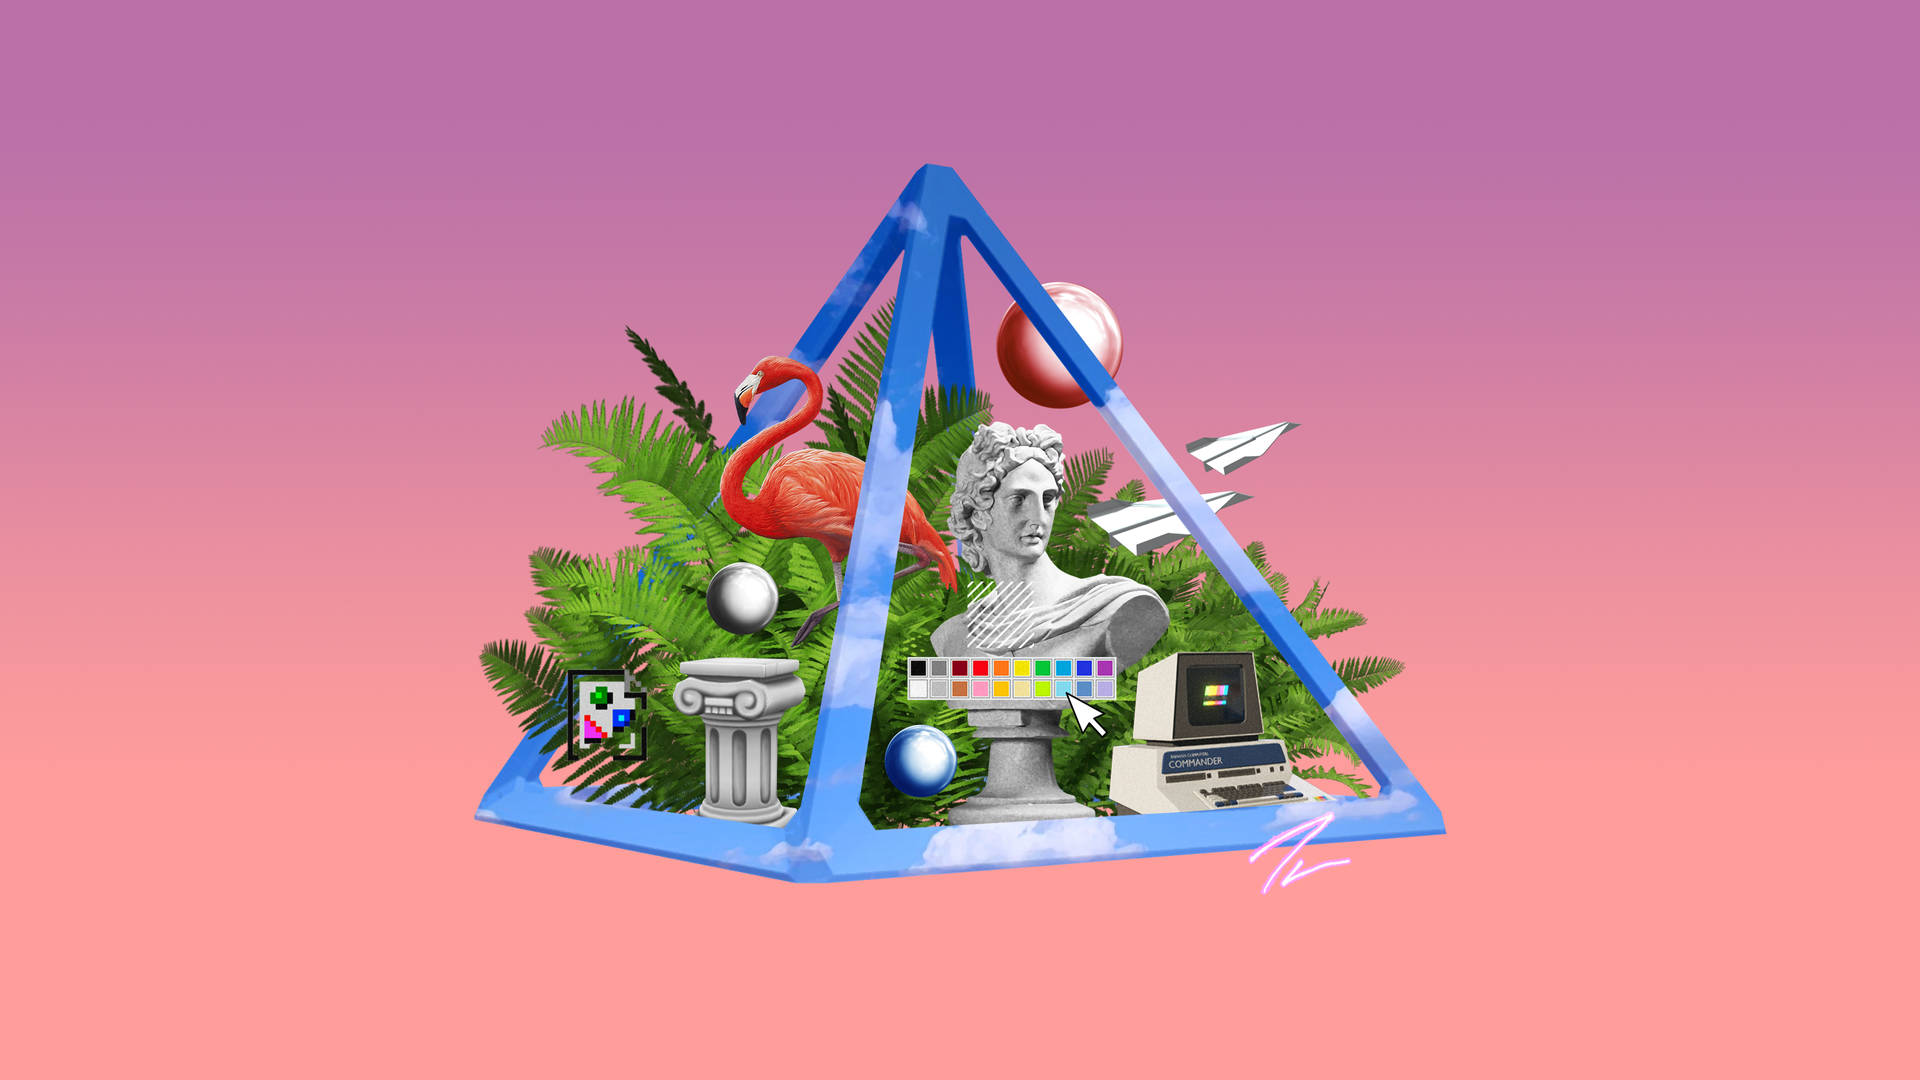 Pyramid Vaporwave Desktop Wallpaper